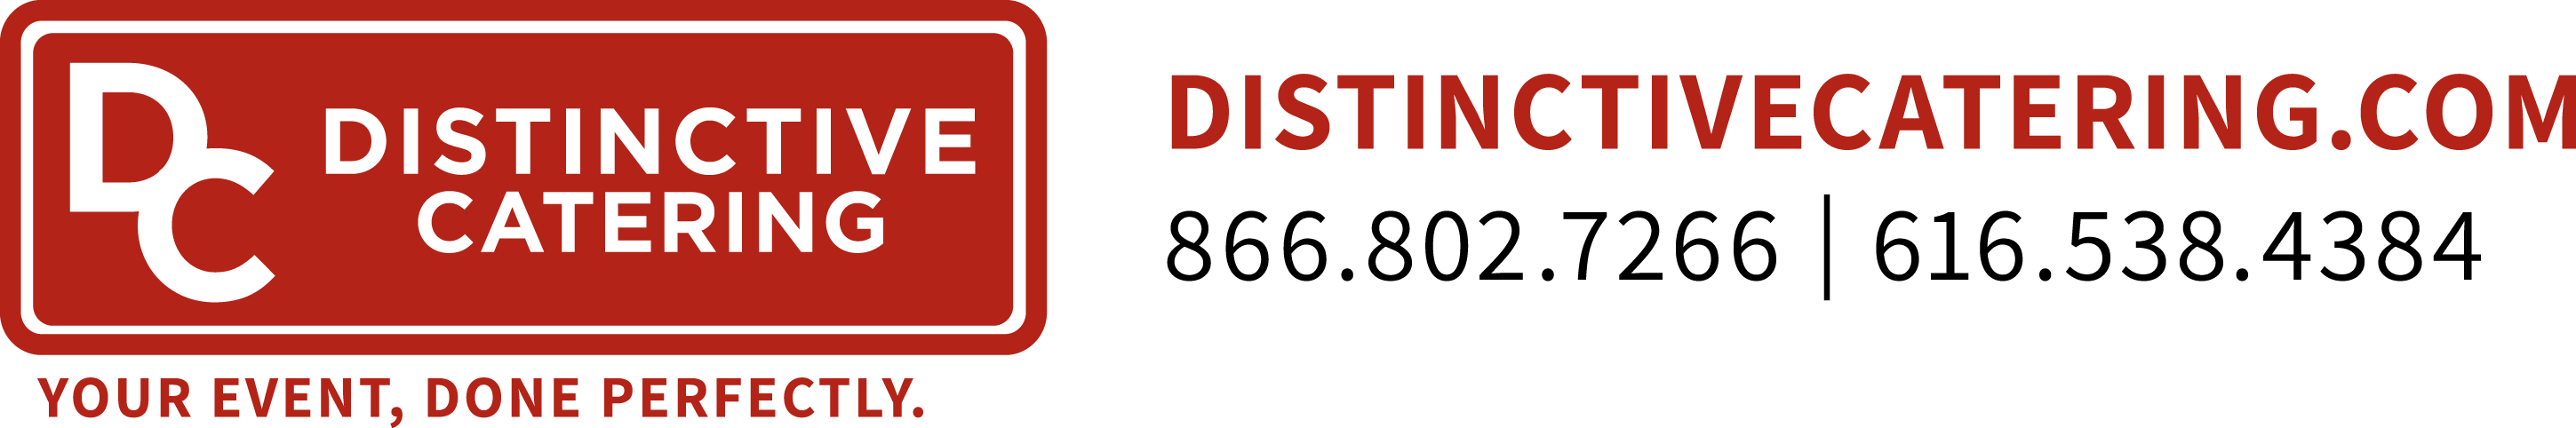 distinctive catering logo